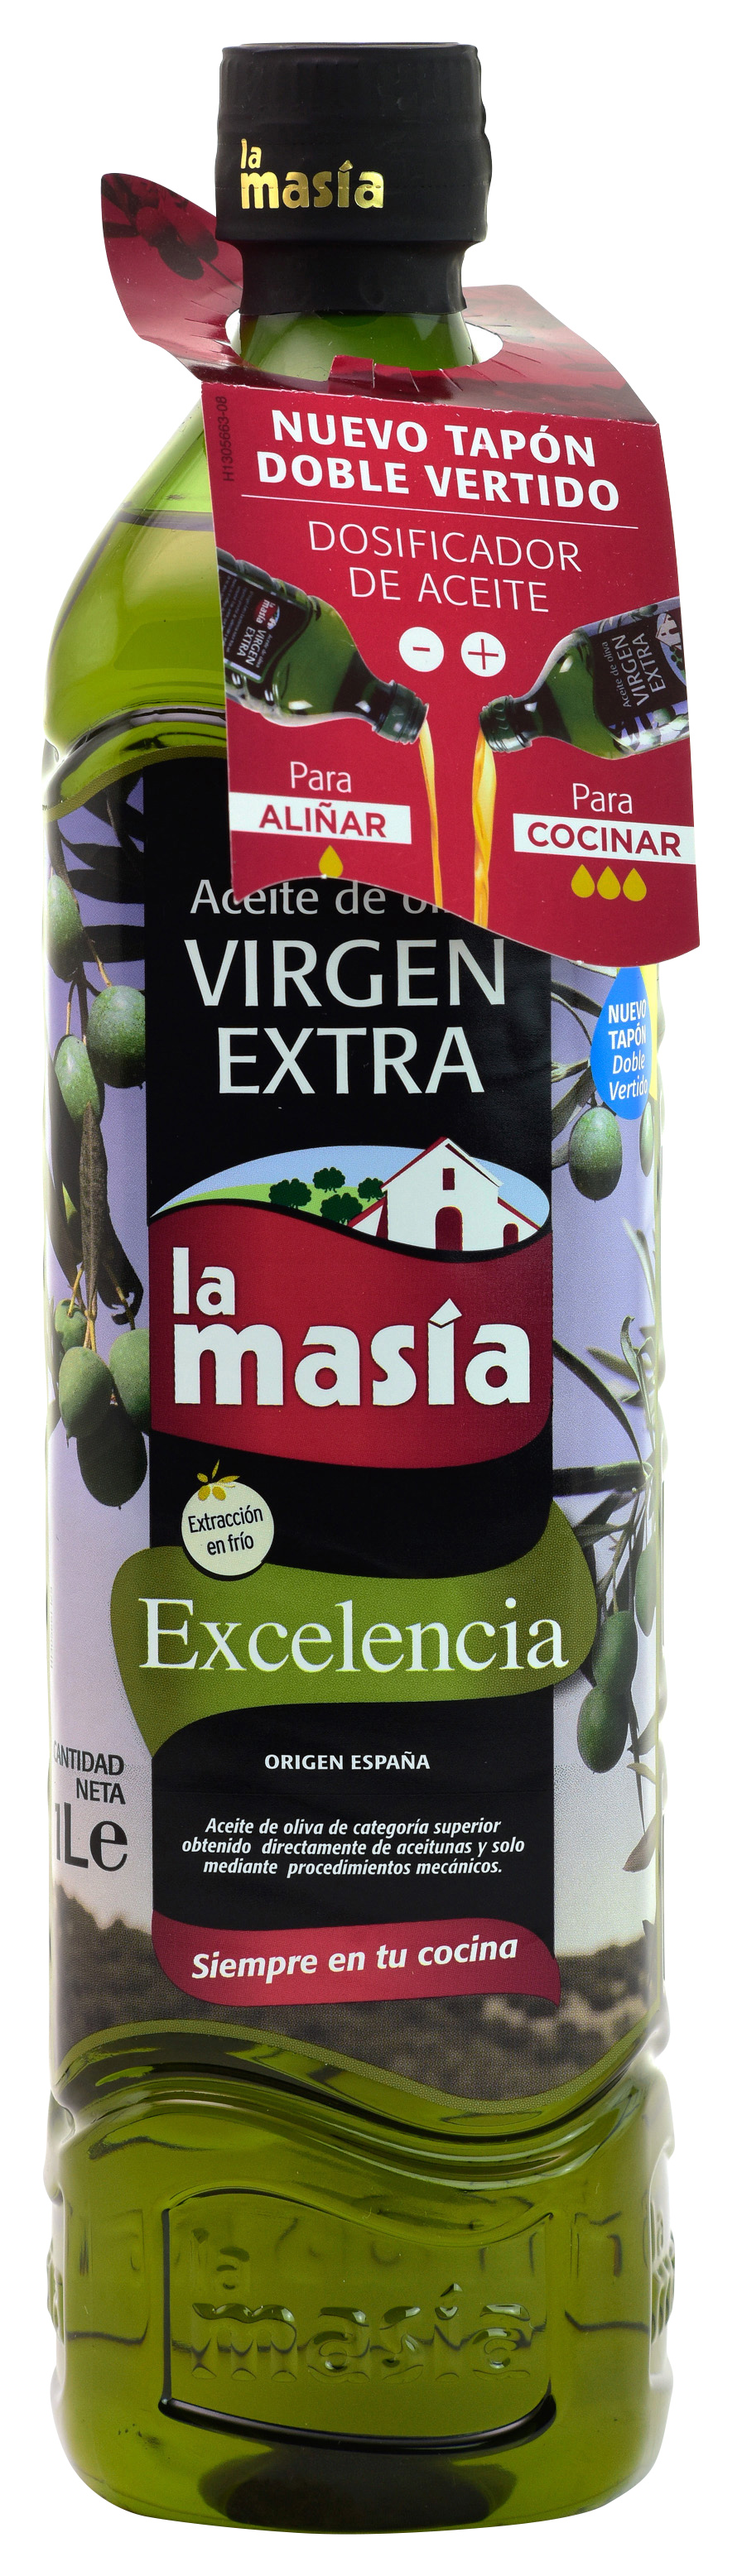 ACEITE DE OLIVA VIRGEN EXTRA. EXCELENCIA